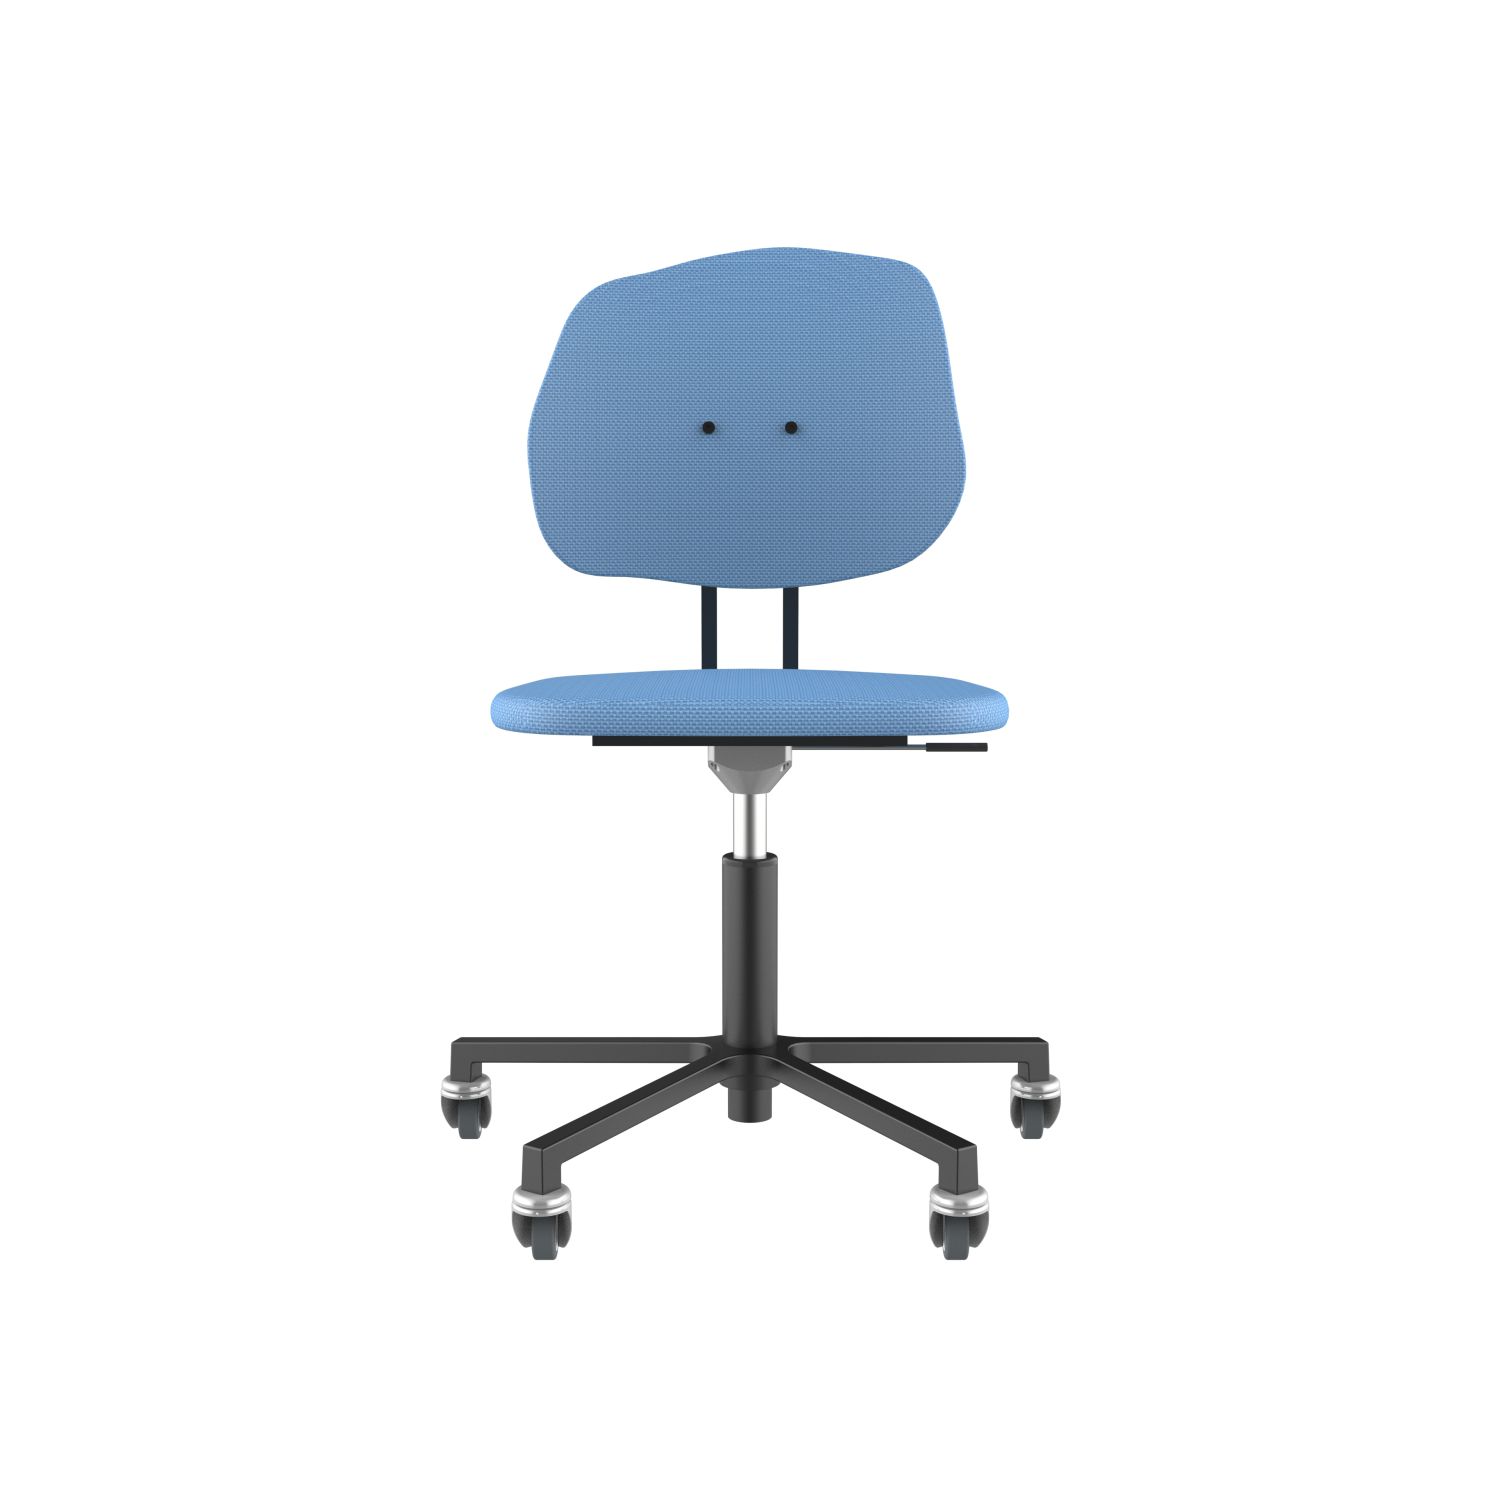 lensvelt maarten baas office chair without armrests backrest g blue horizon 040 black ral9005 soft wheels